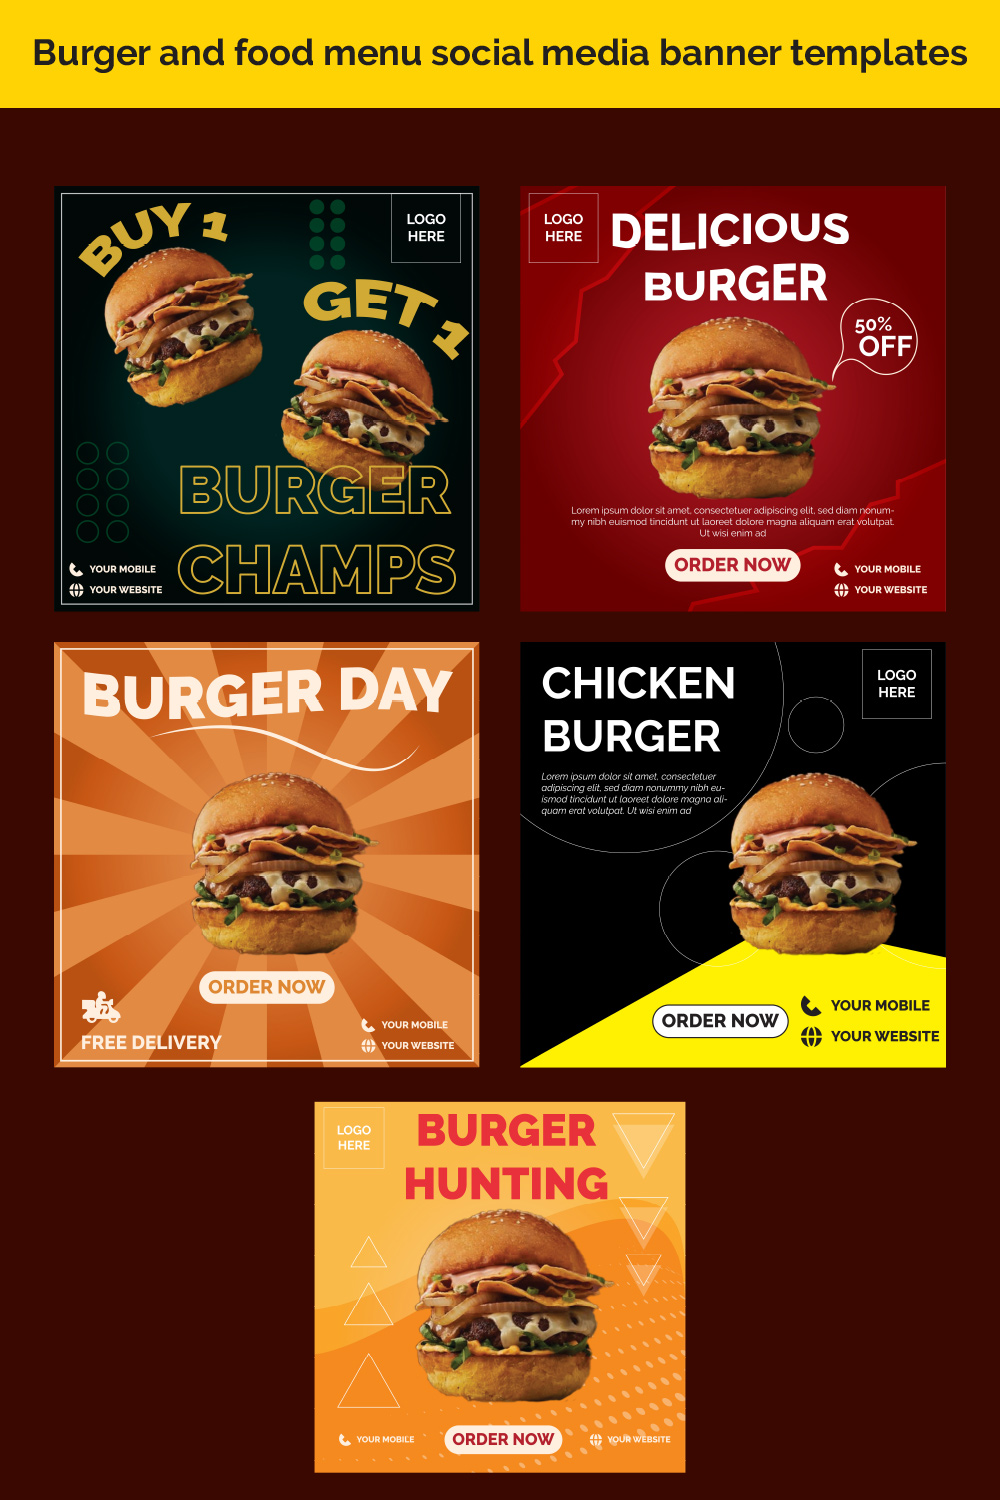 Burger and food menu social media banner templates pinterest preview image.